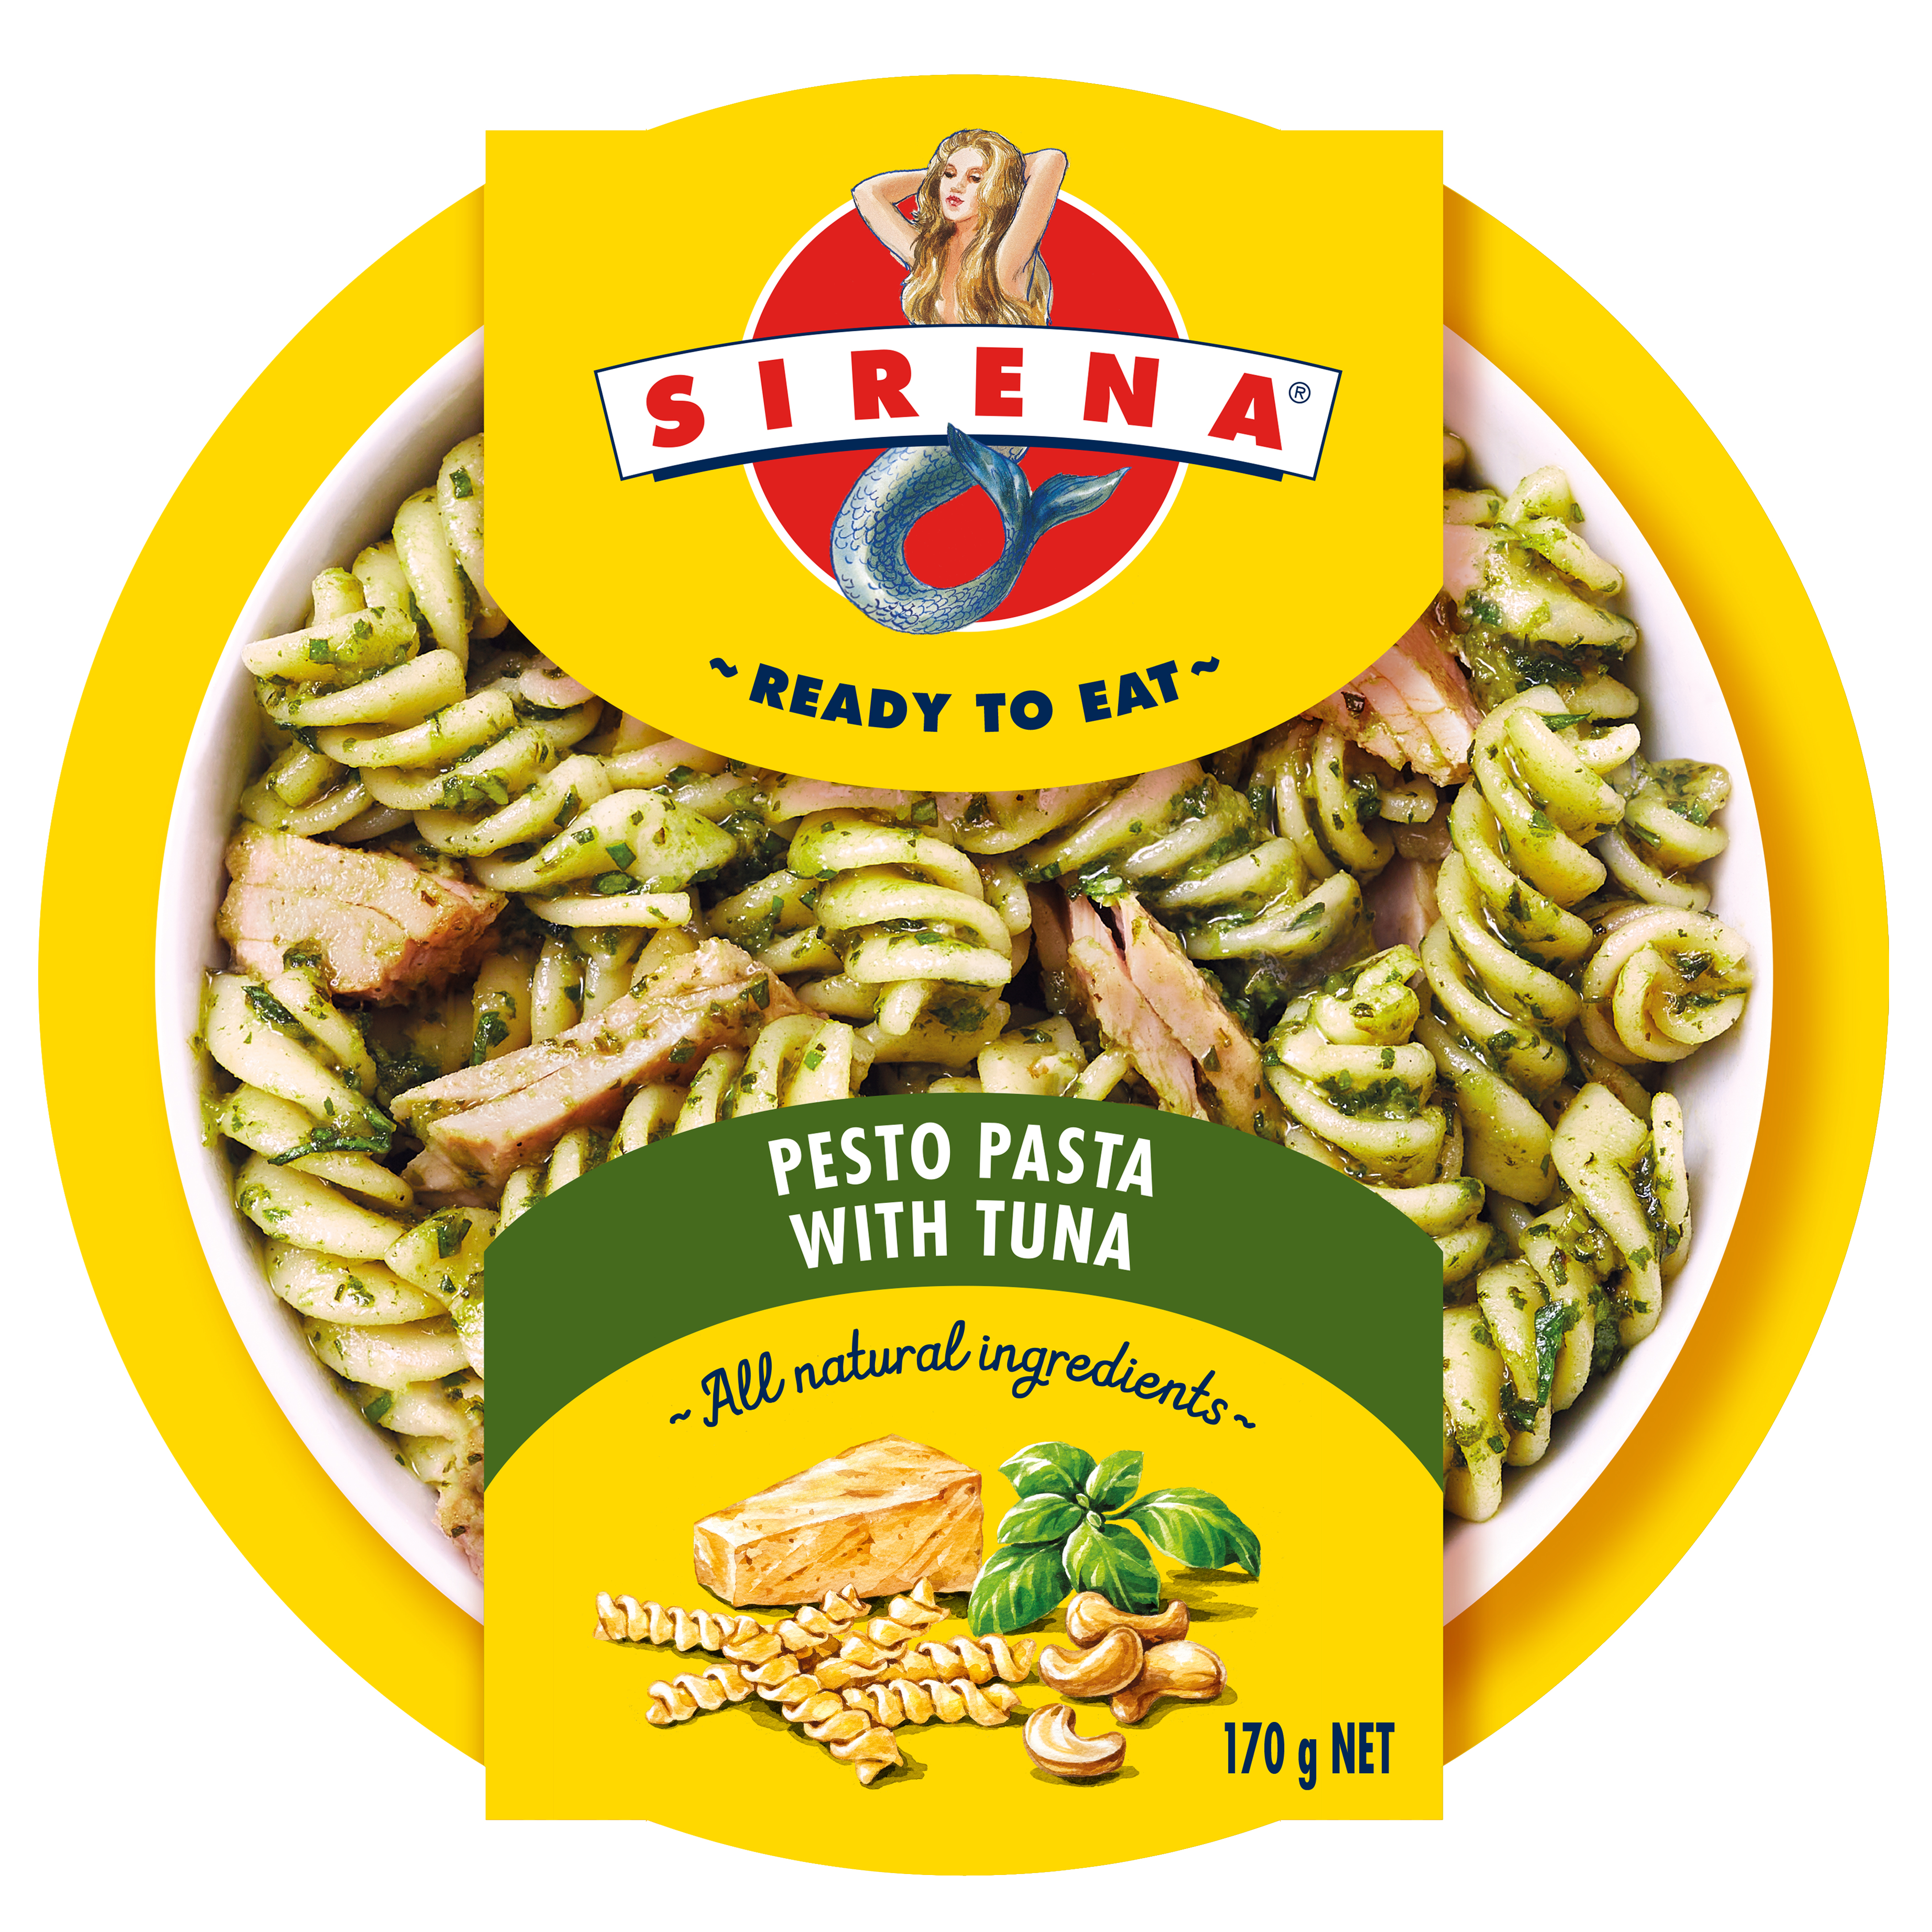 Sirena Ready to Eat Pesto Pasta with Tuna